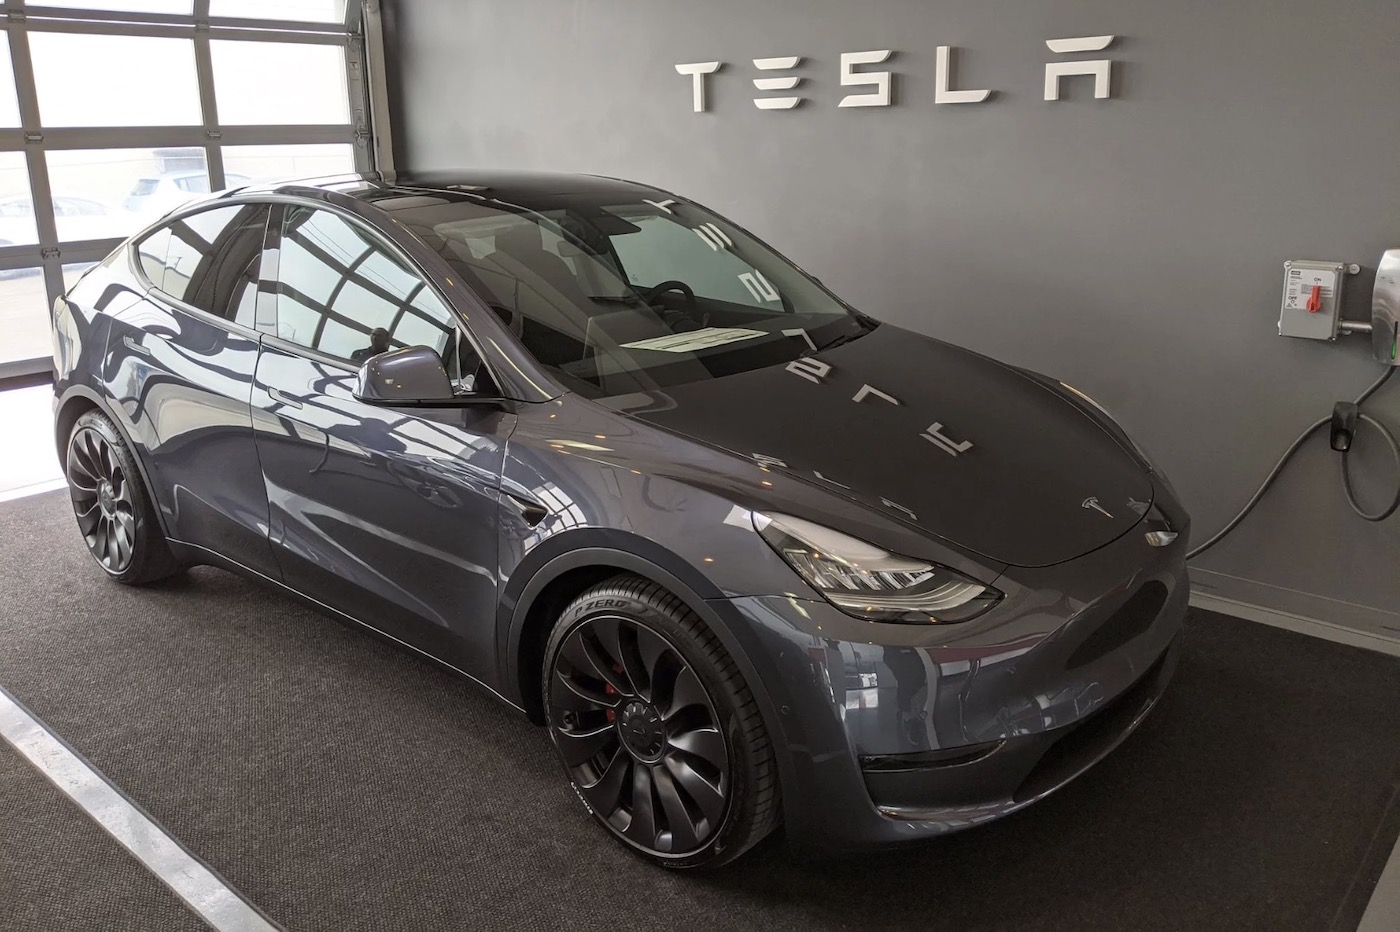 Tesla livraison Model Y